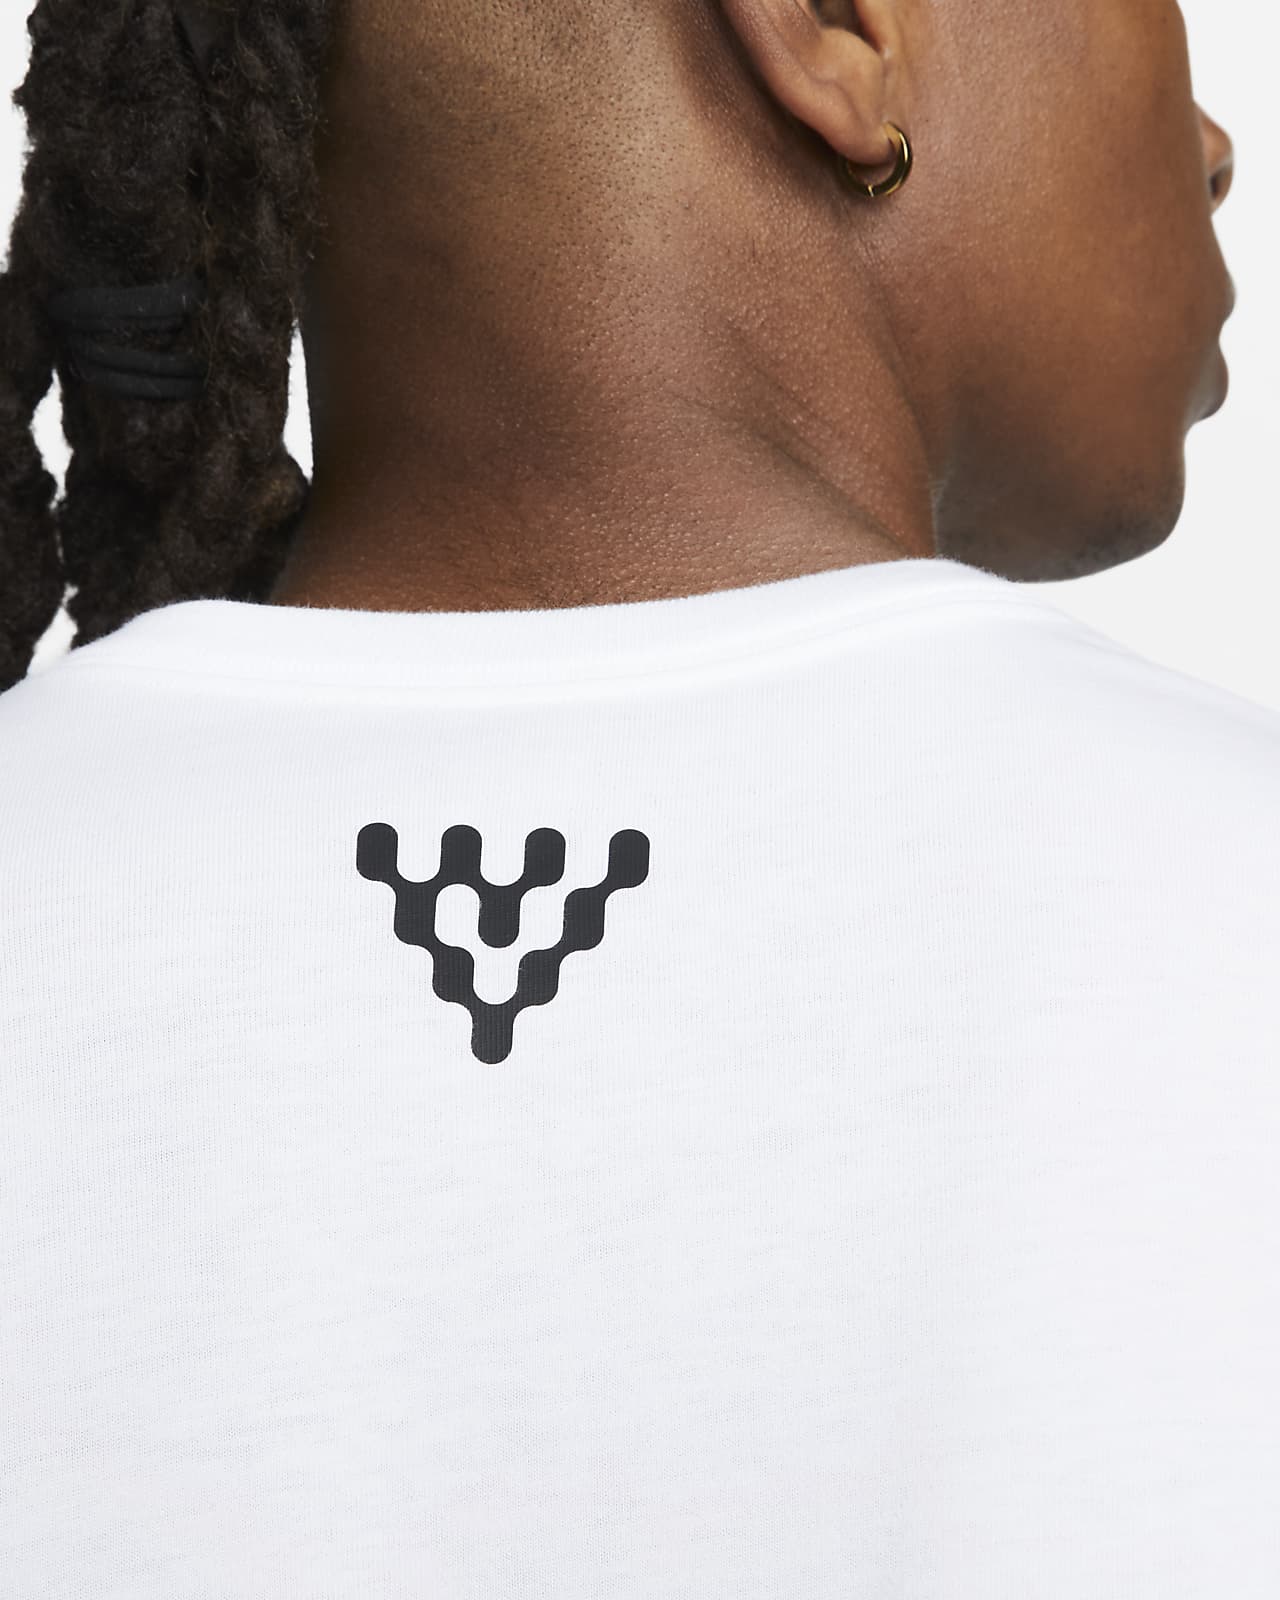 Rapinoe USWNT Photo Men's Nike Soccer T-Shirt.